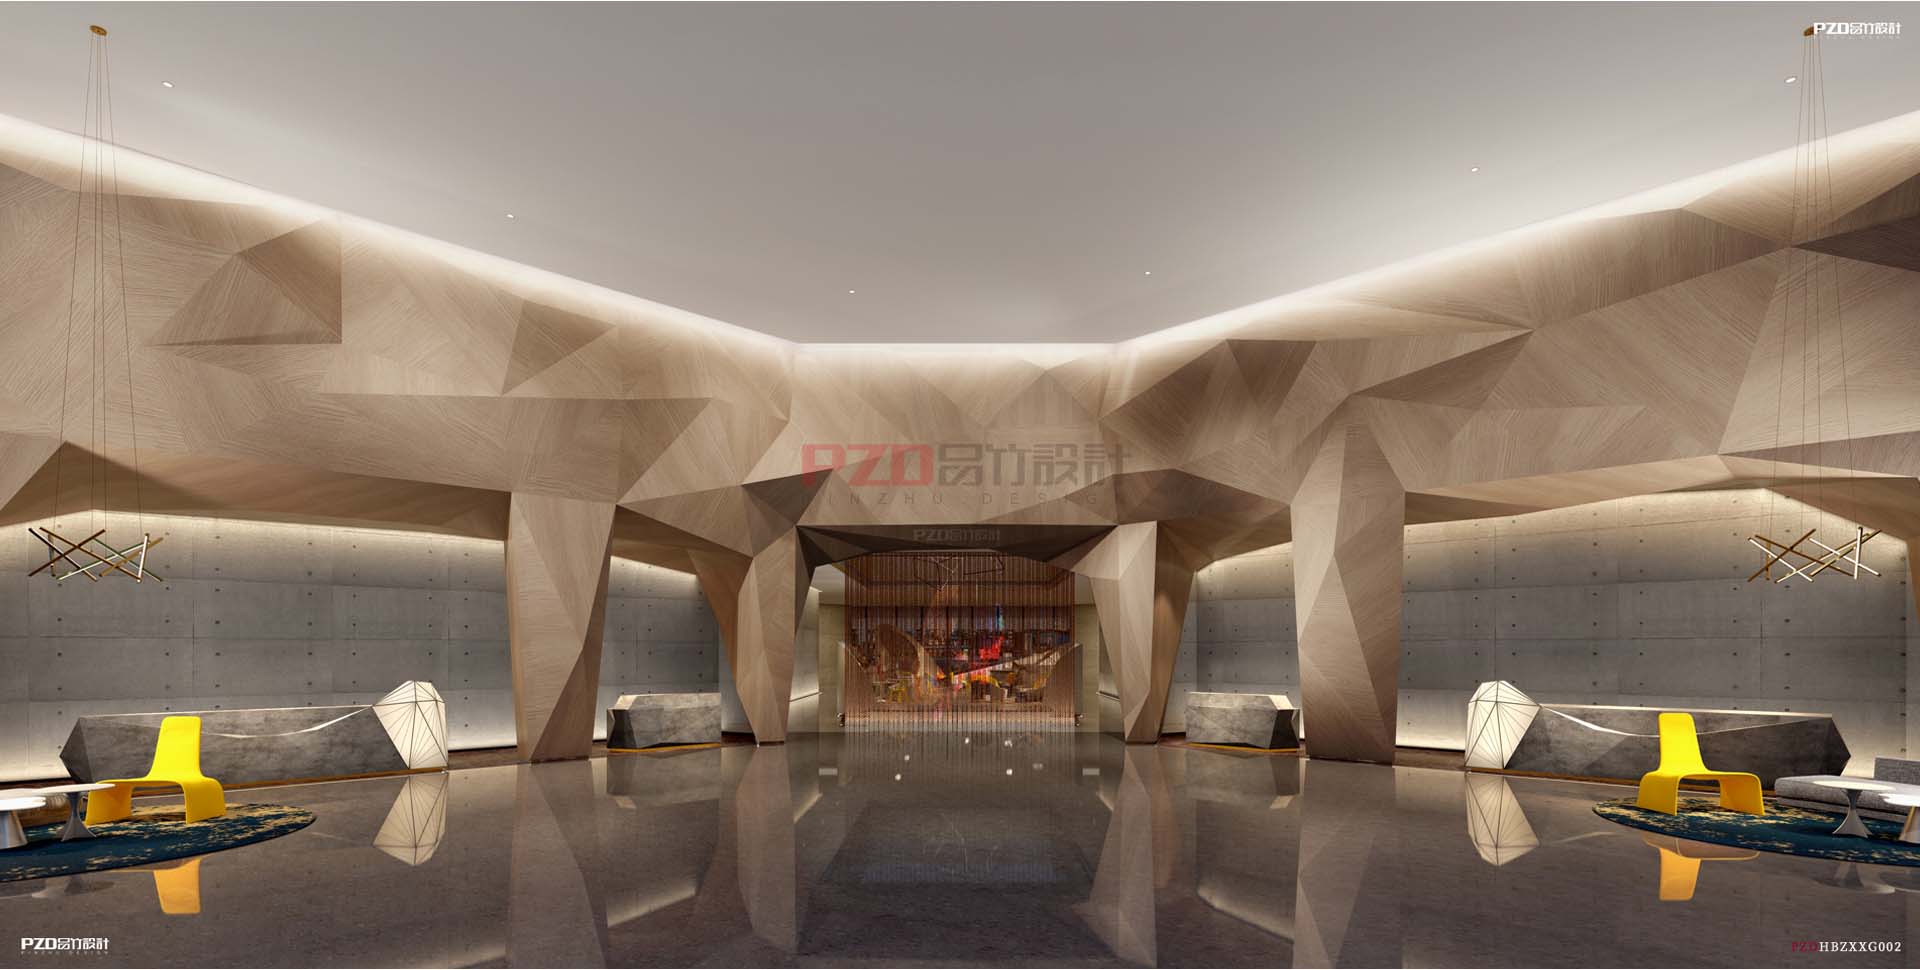 (PZD)专业酒店设计规划公司_十大高端酒店装饰设计品牌 - 上海品竹酒店室内设计公司